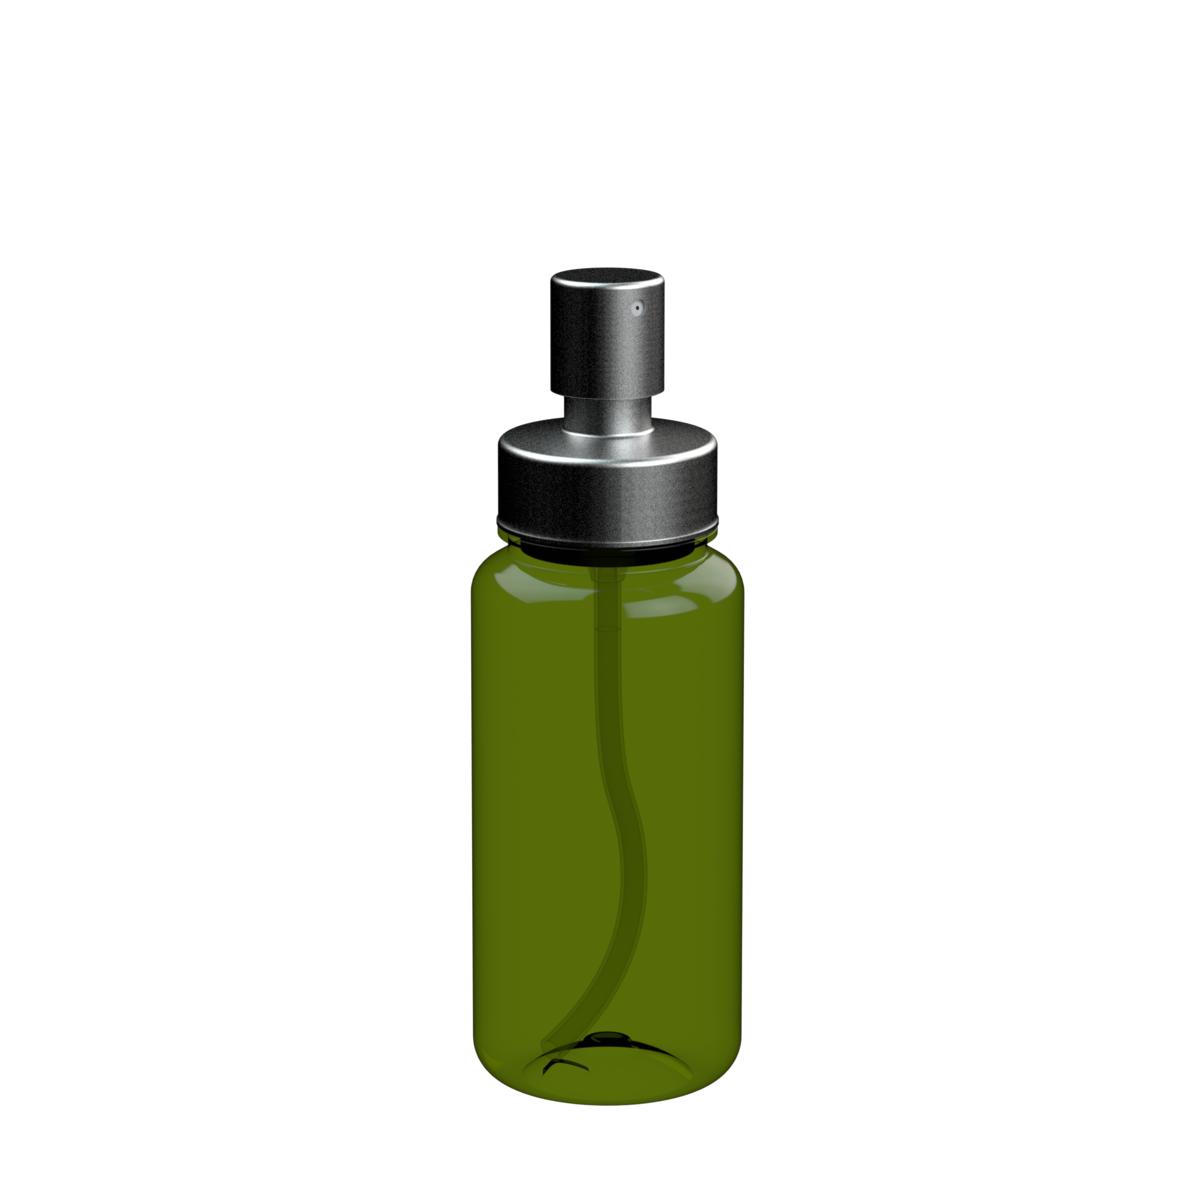 High-quality Spray Bottle - Thorpe Mandeville - Rossendale